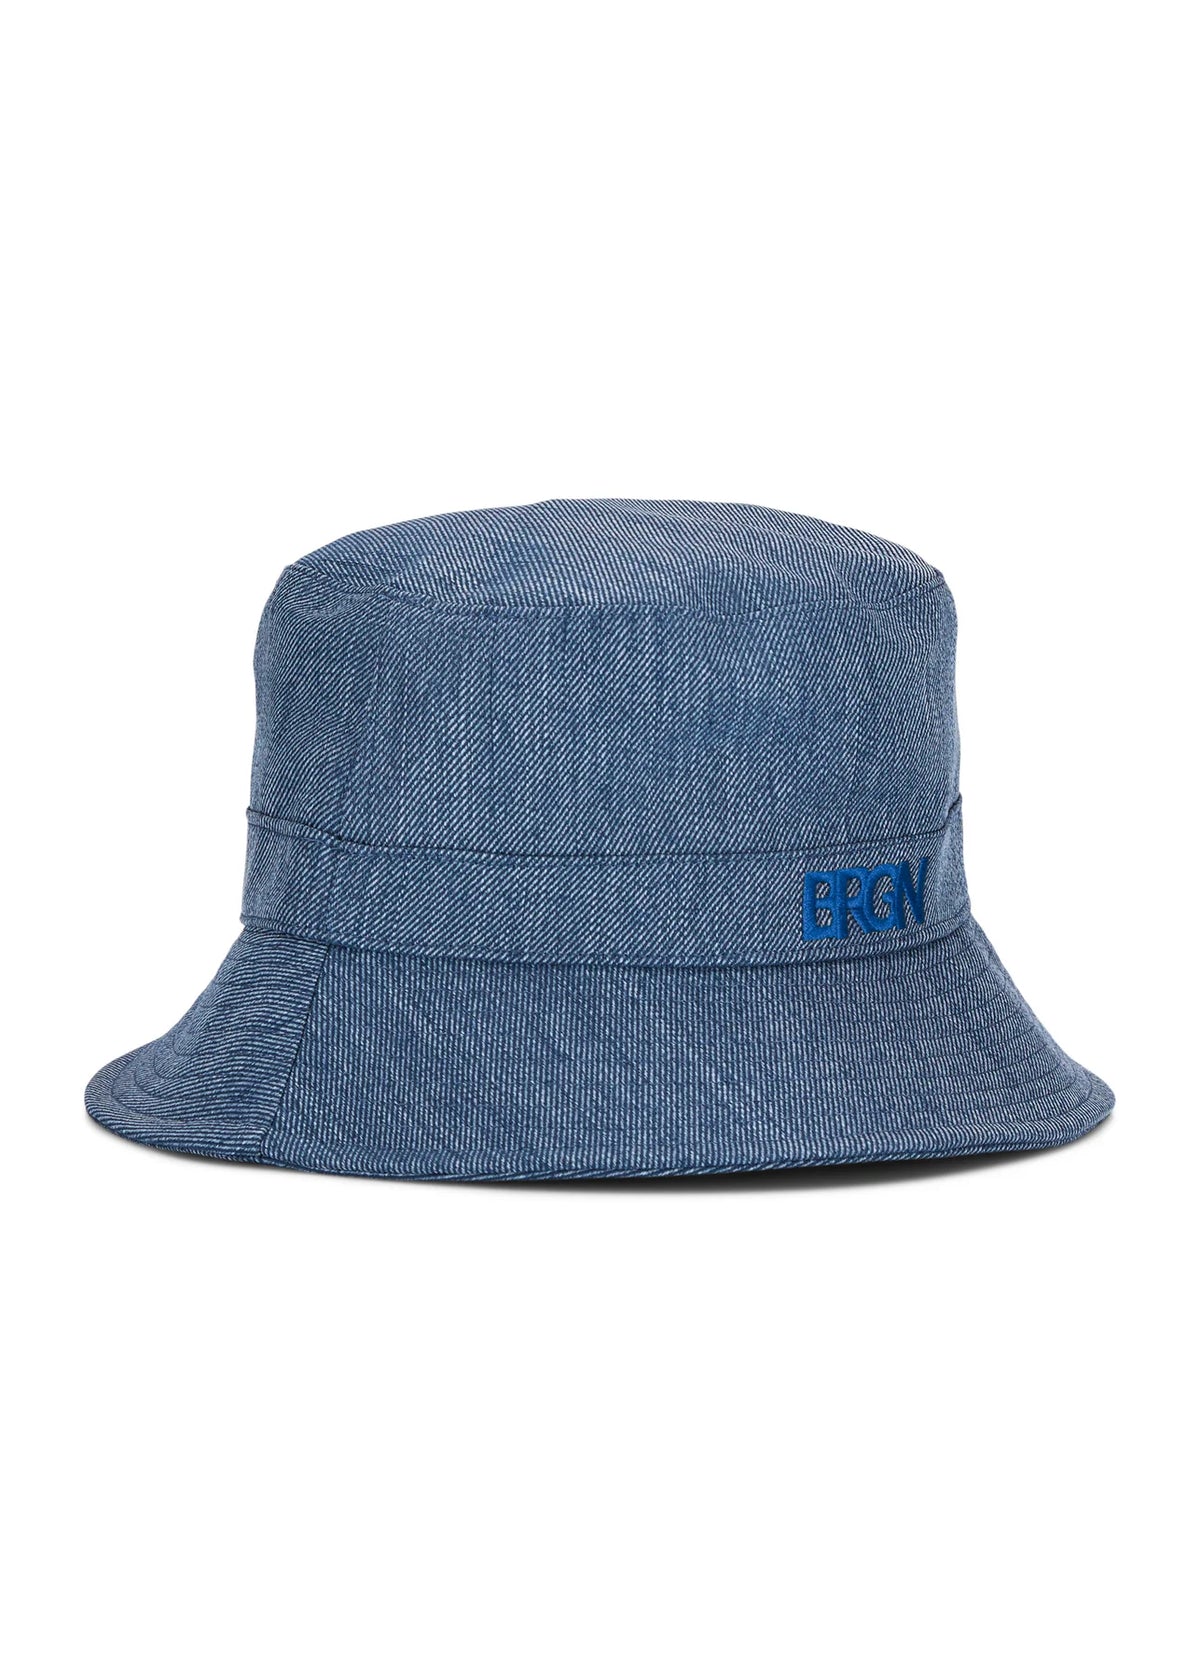 Recycled polyester denim blue waterproof bucket hat